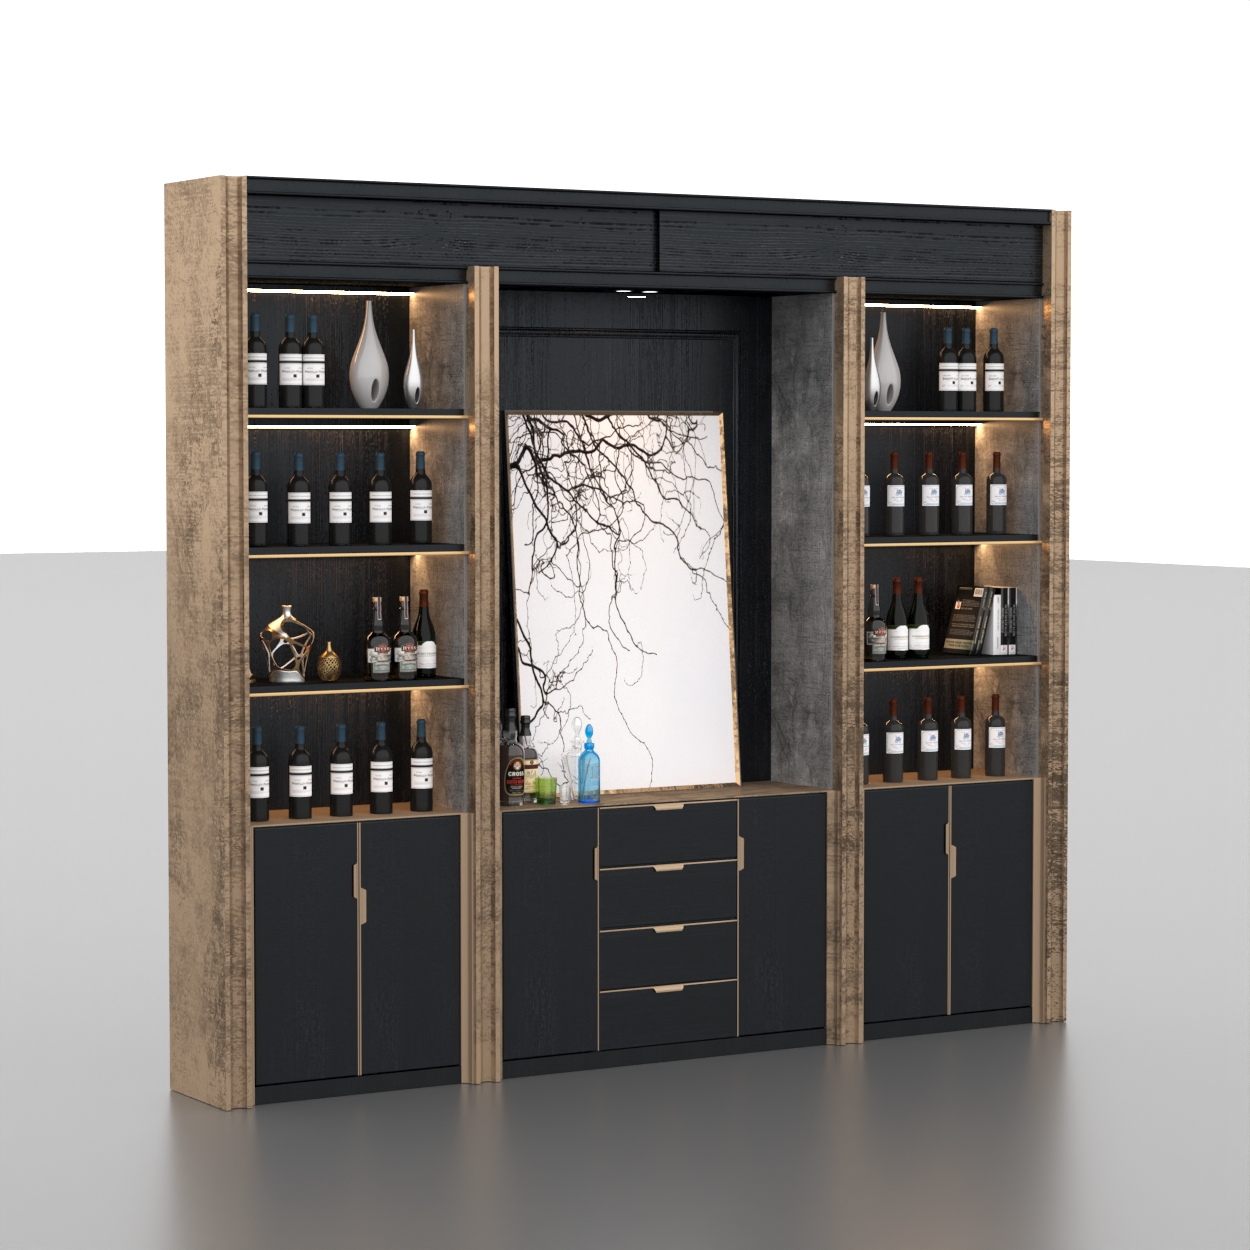 10489. Download Free Wine Cabinet Model By Ngoc Nguyen